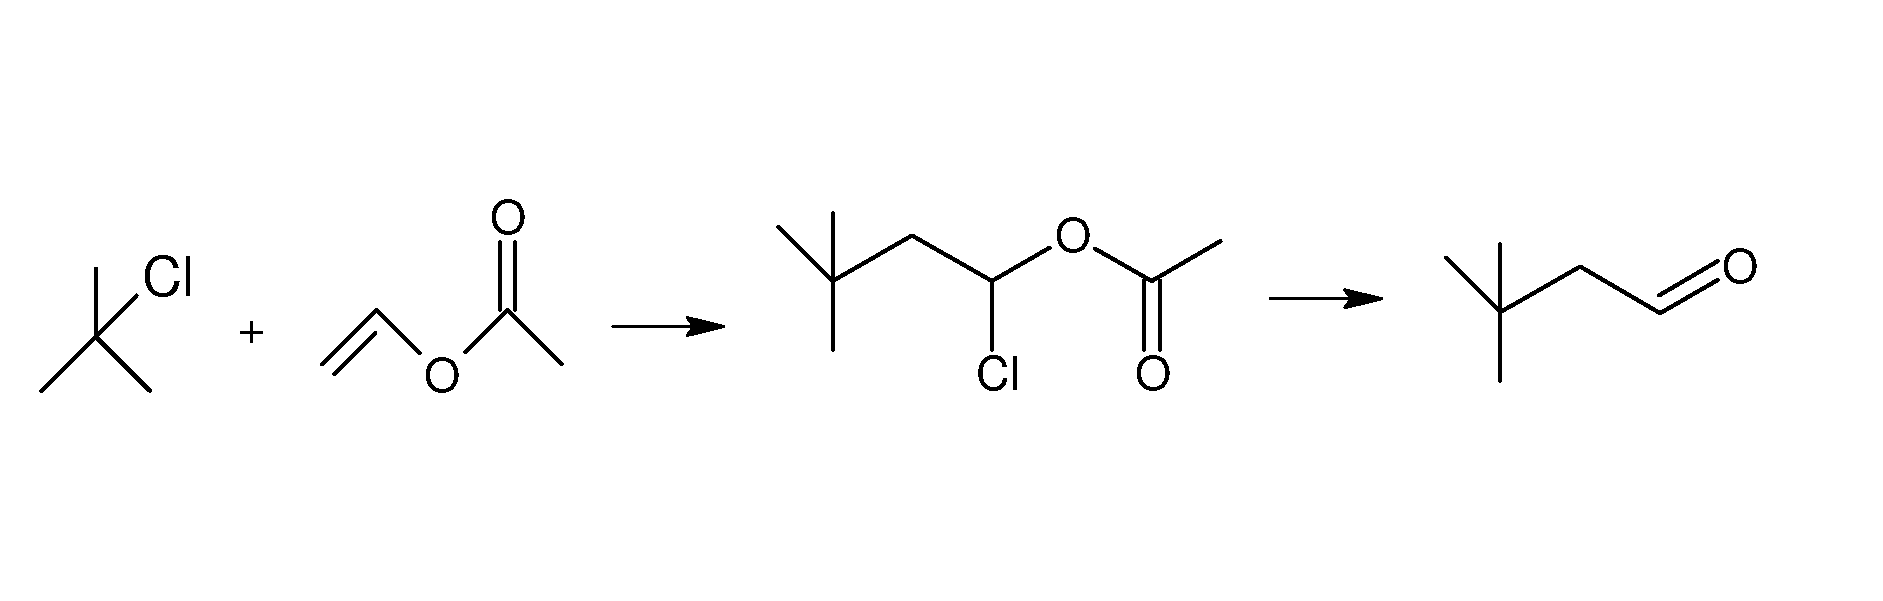 Method for preparing 3,3-dimethylbutyraldehyde